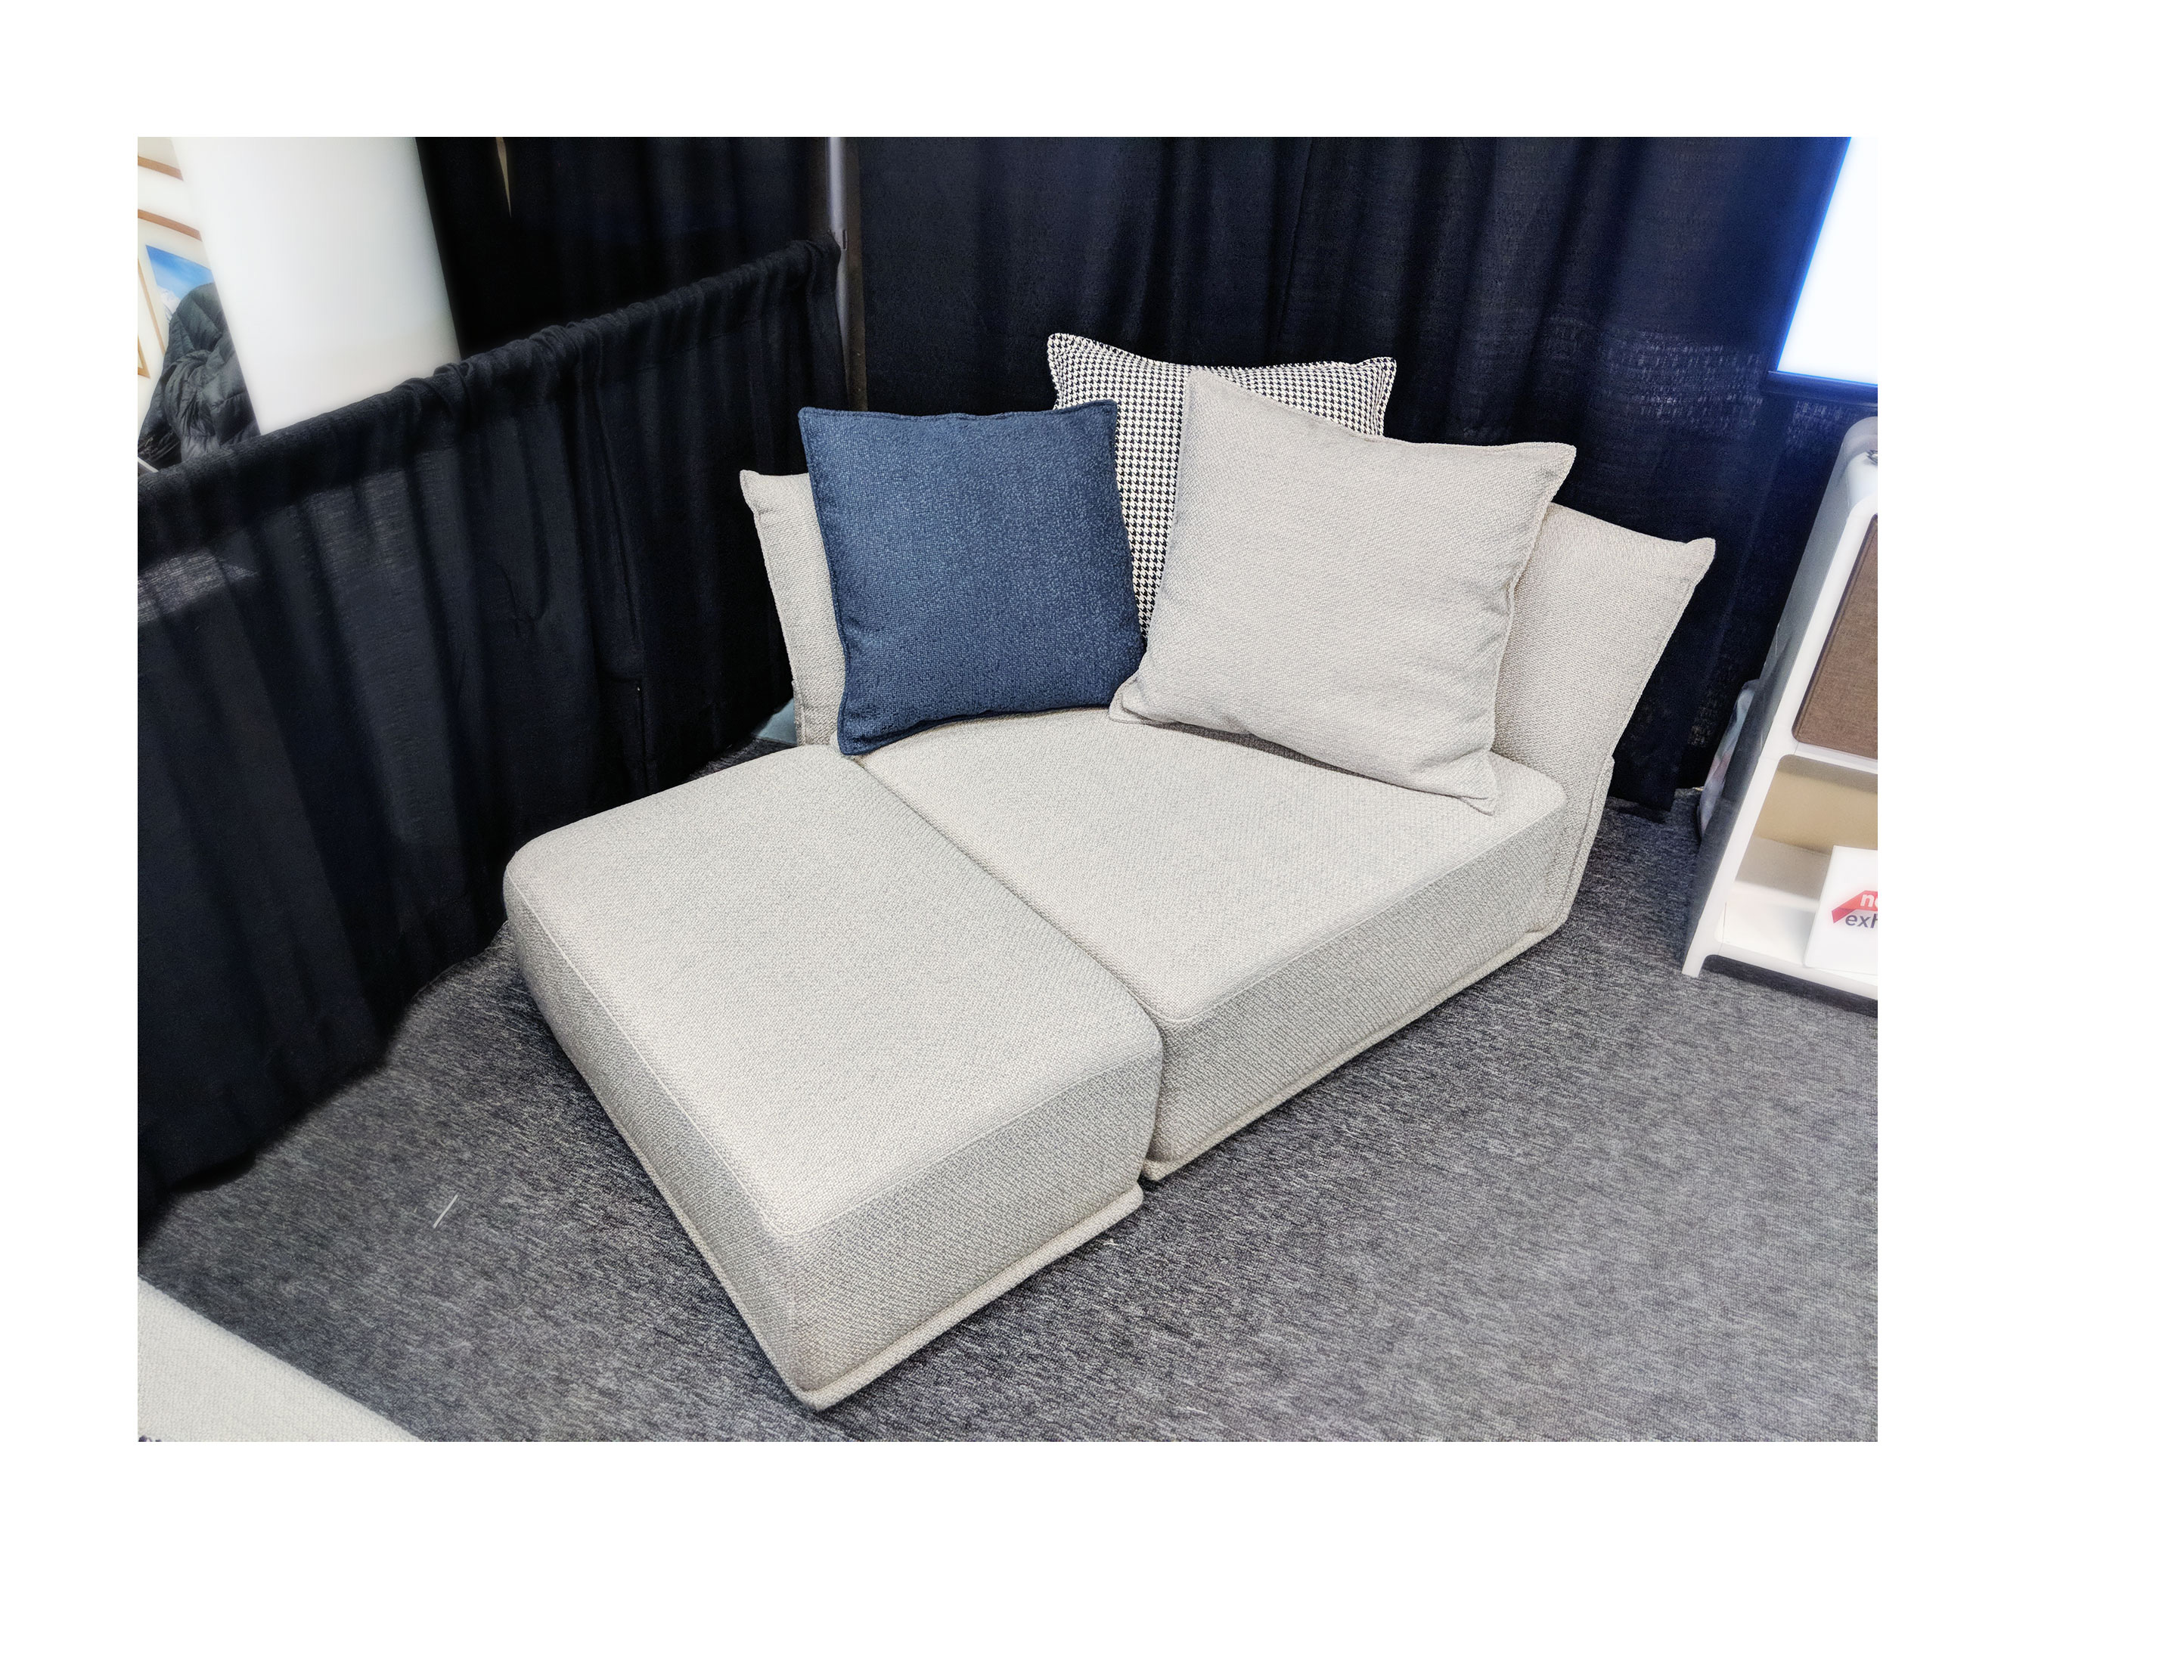 https://expandfurniture.com/wp-content/uploads/2018/03/harmony-mini-ottoman-add-on-put-next-to-sofa-1.jpg